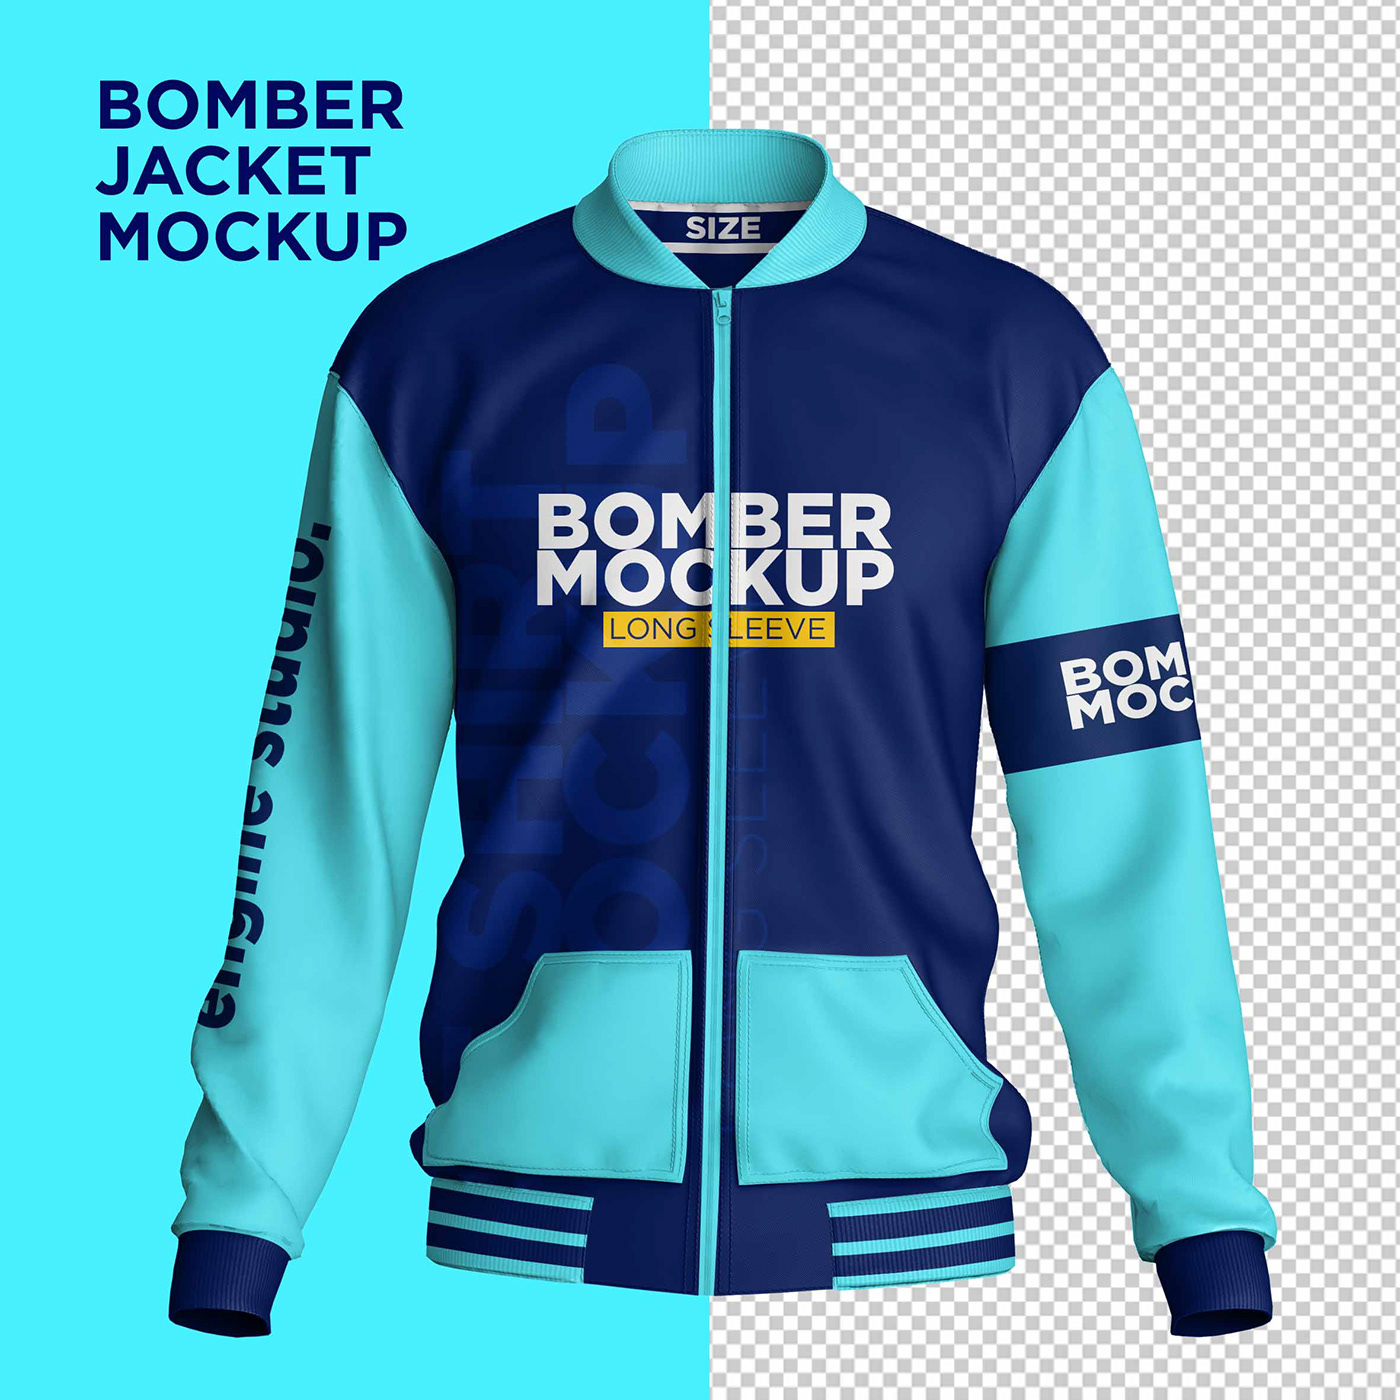 apparel mockup Boomber Jacket jacket mockup Jersey mockup product mockup realistic mockup sublimation t-shirt mockup Template Mockup